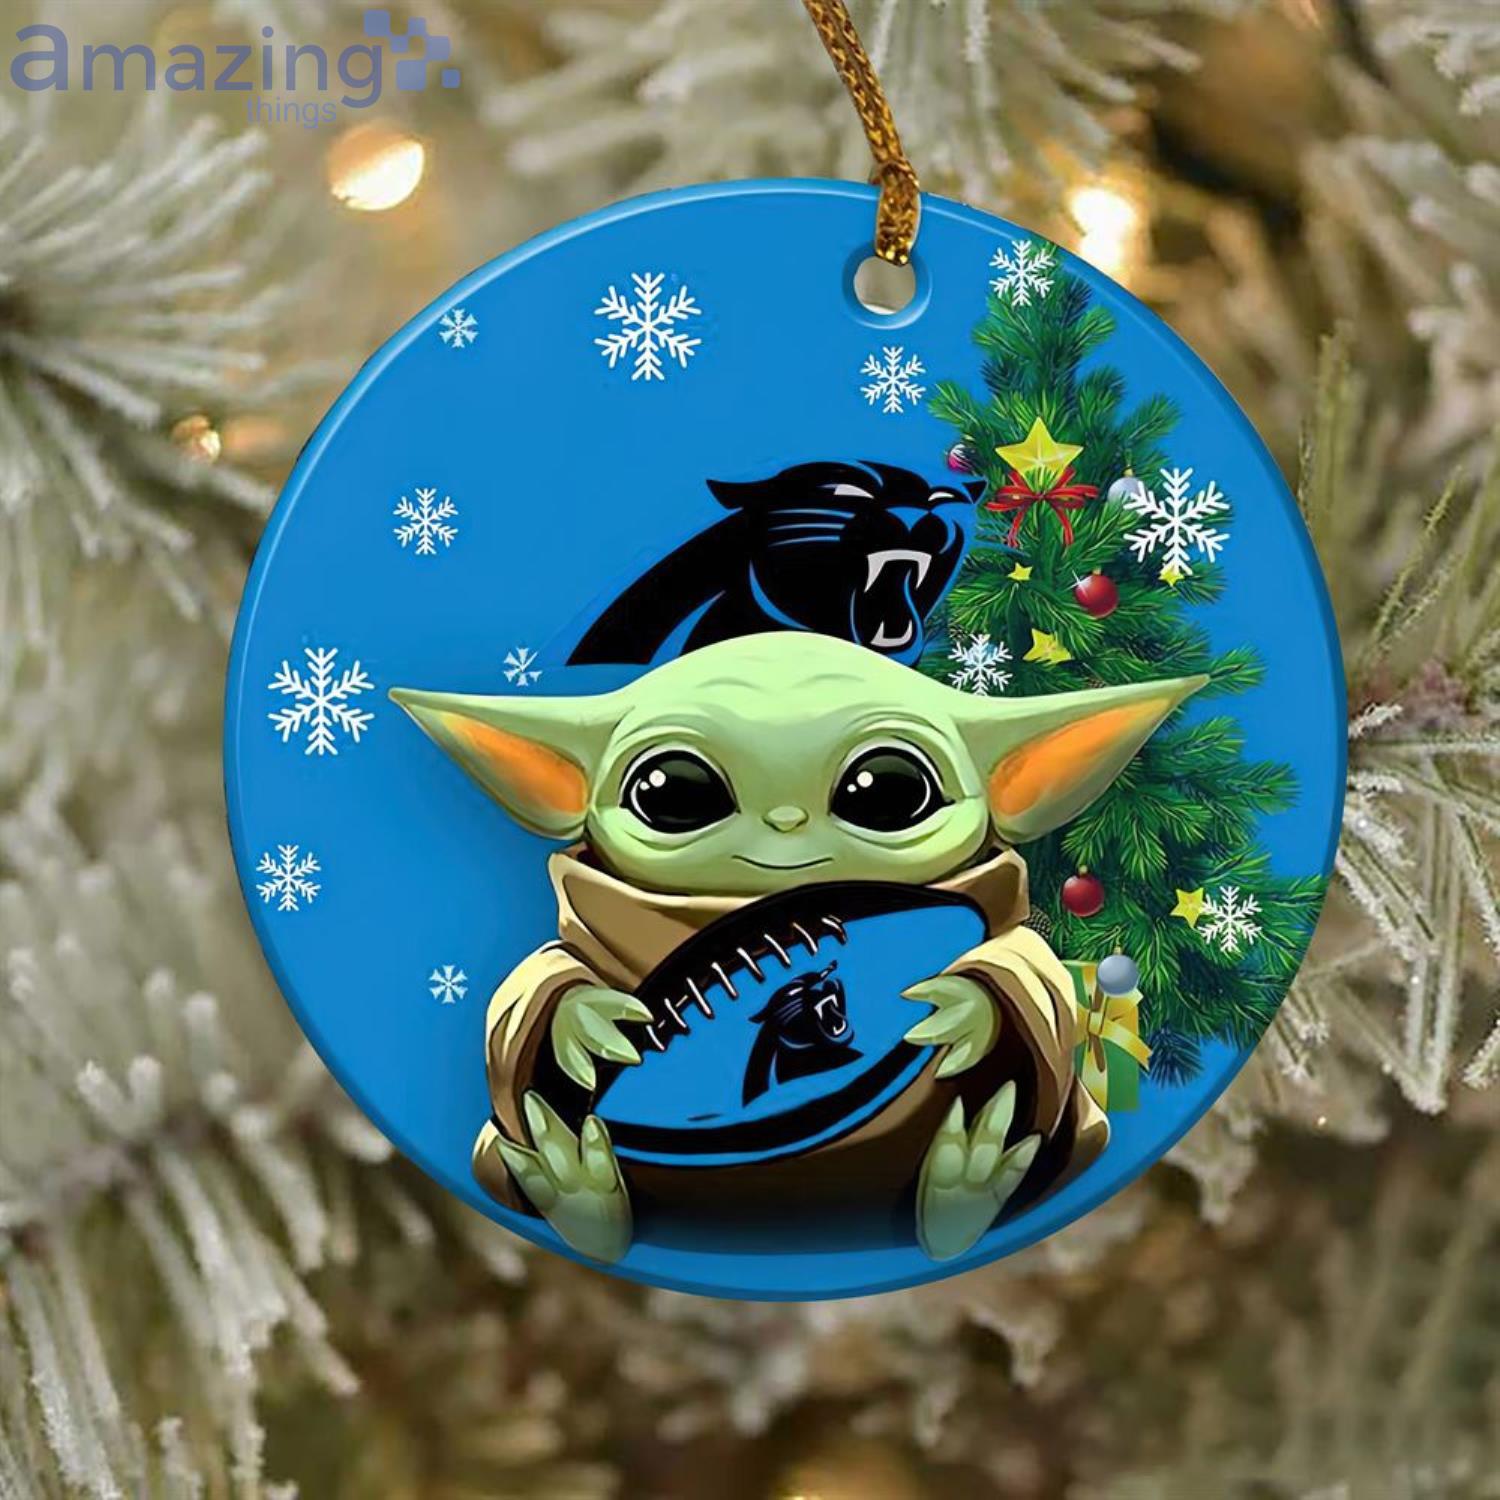 Dallas Cowboys-Baby Yoda Christmas Tree Ornament